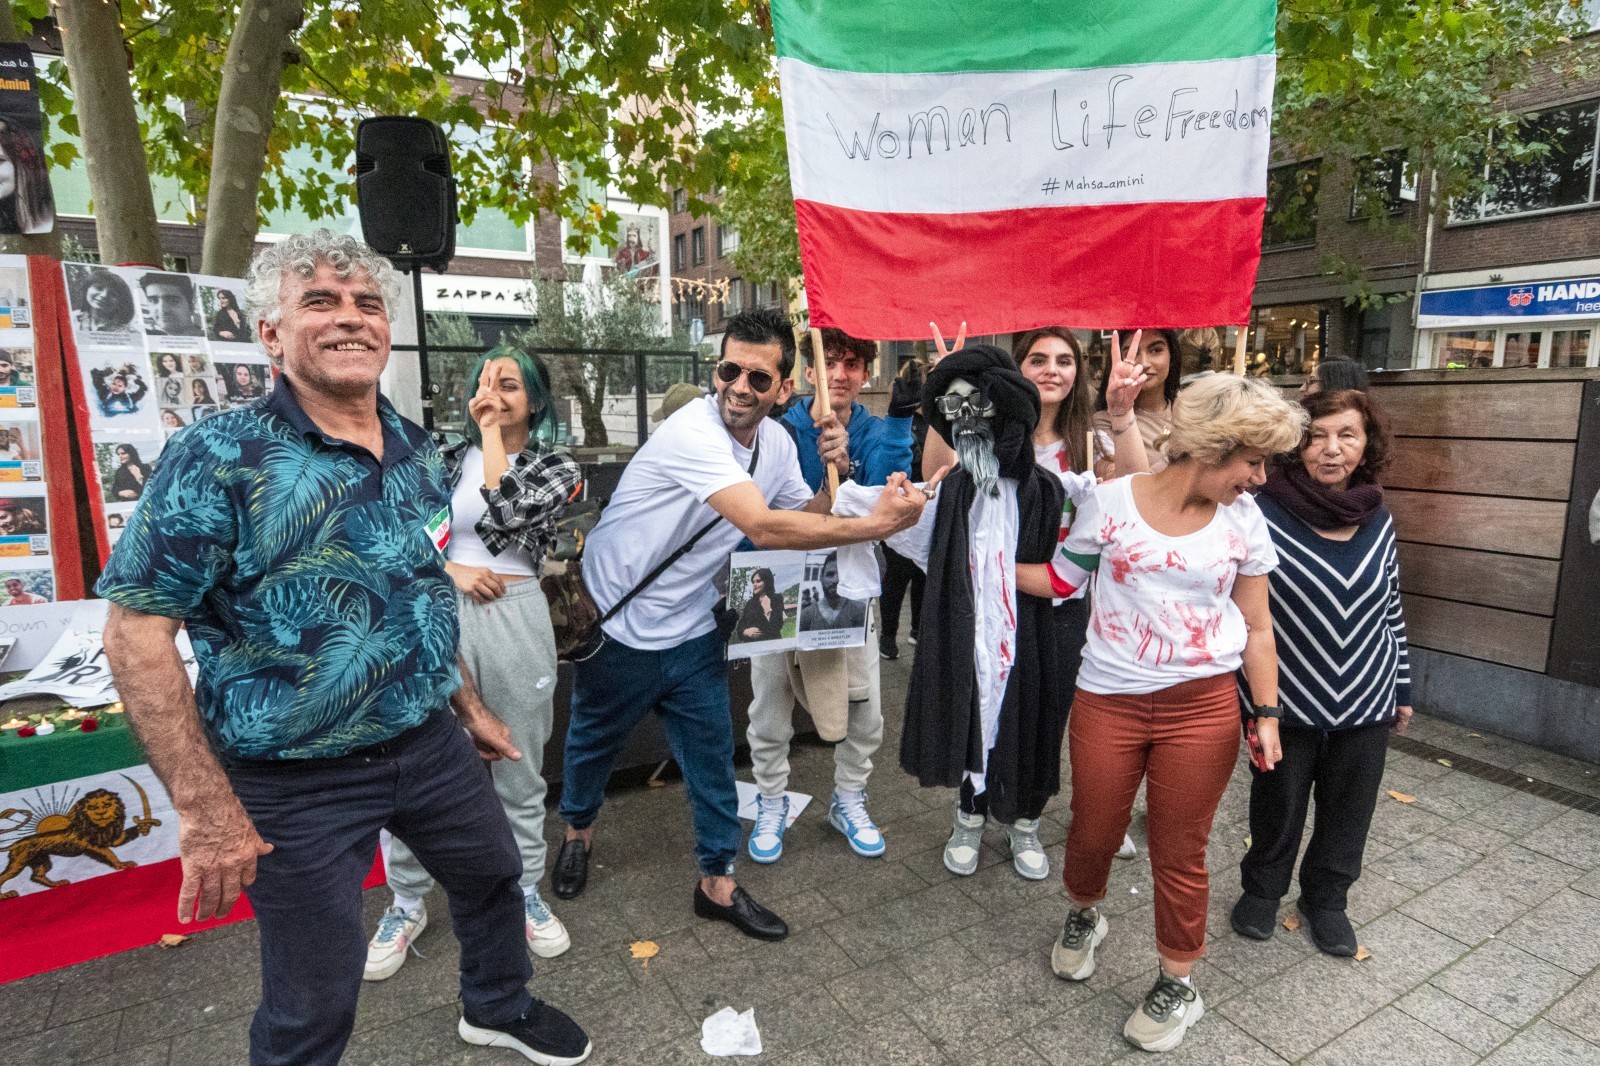 Demo Iran in Nijmegen